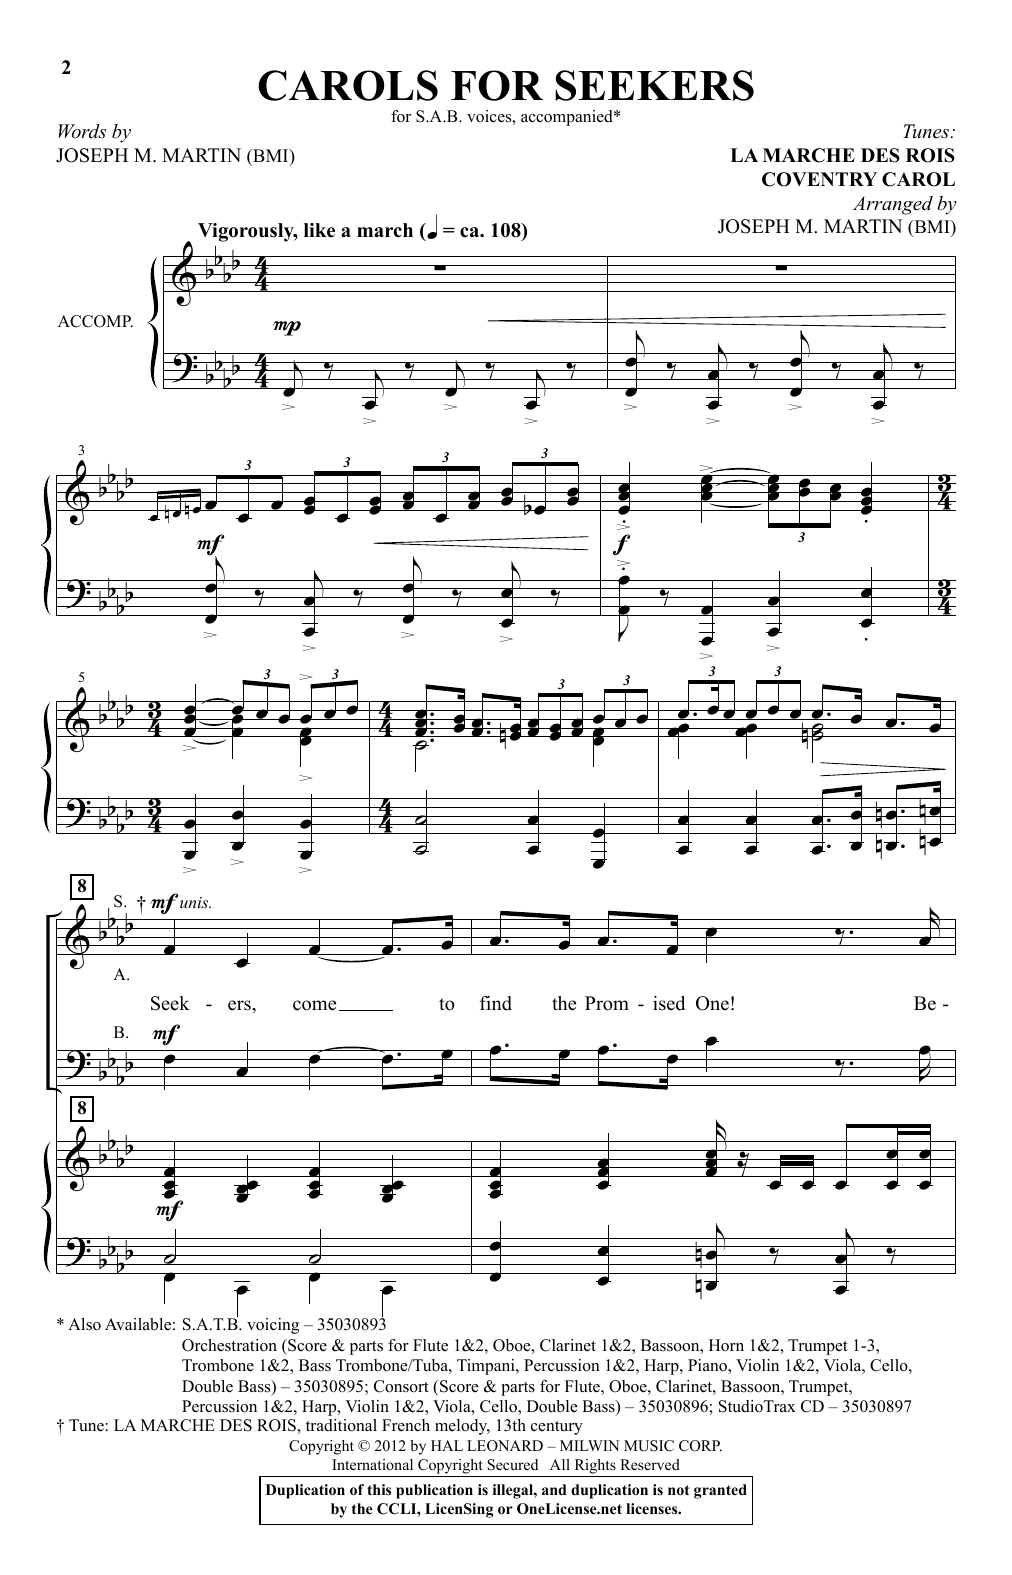 Joseph M. Martin Carols For Seekers Sheet Music Notes & Chords for SAB - Download or Print PDF